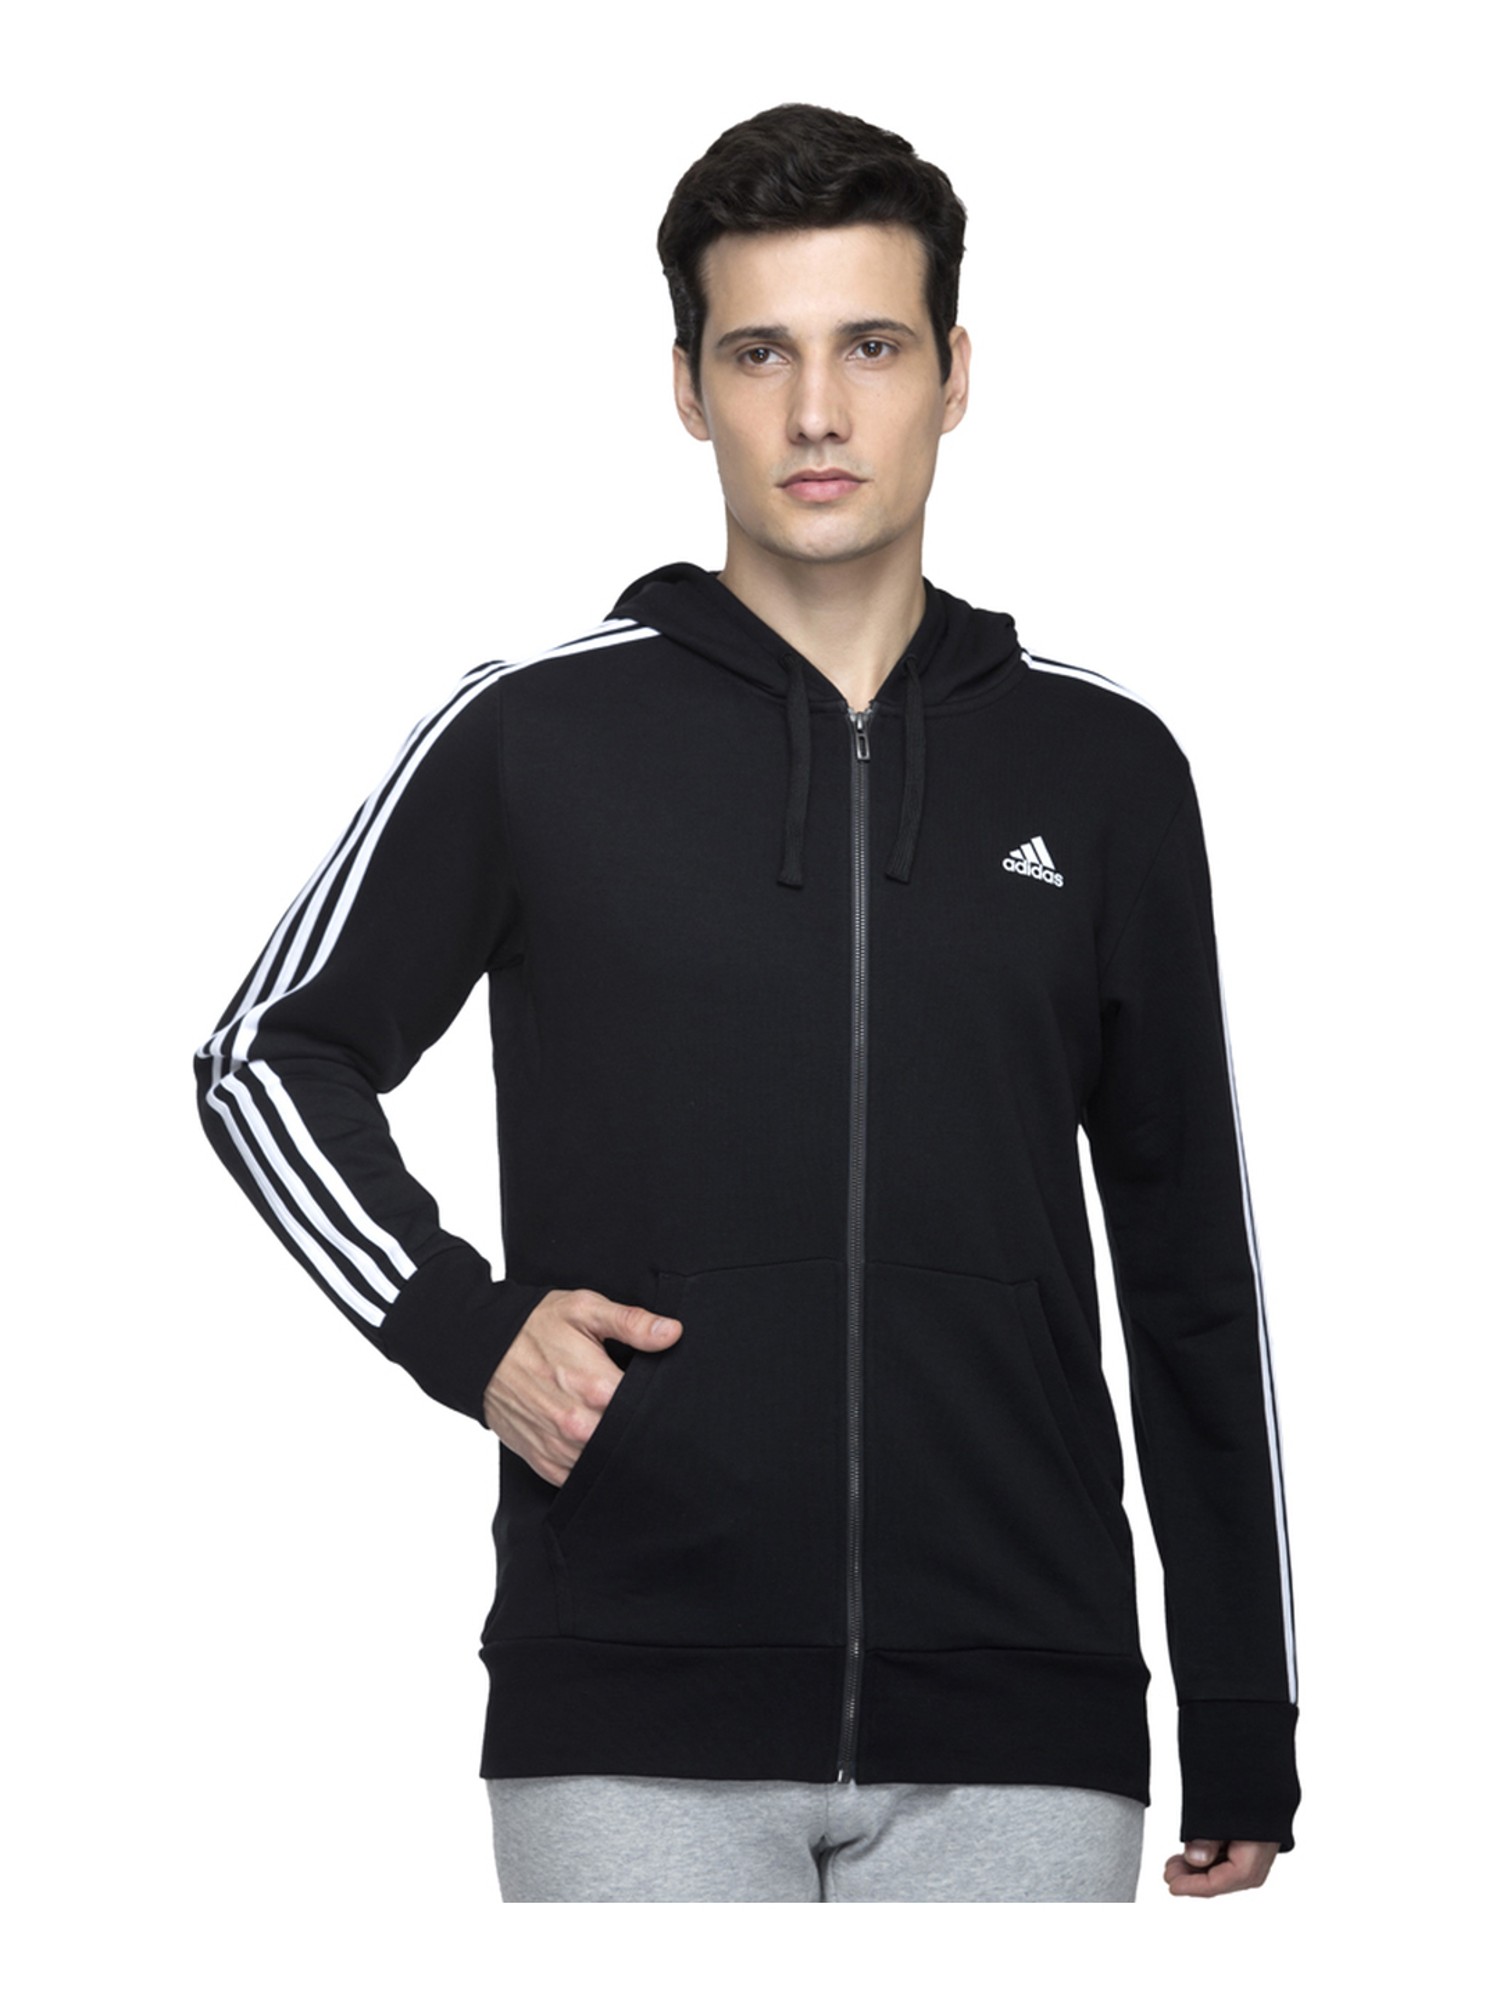 Abundantly Aboard Weird Buy Adidas Black Regular Fit Hooded Jacket for Mens Online @ Tata CLiQ